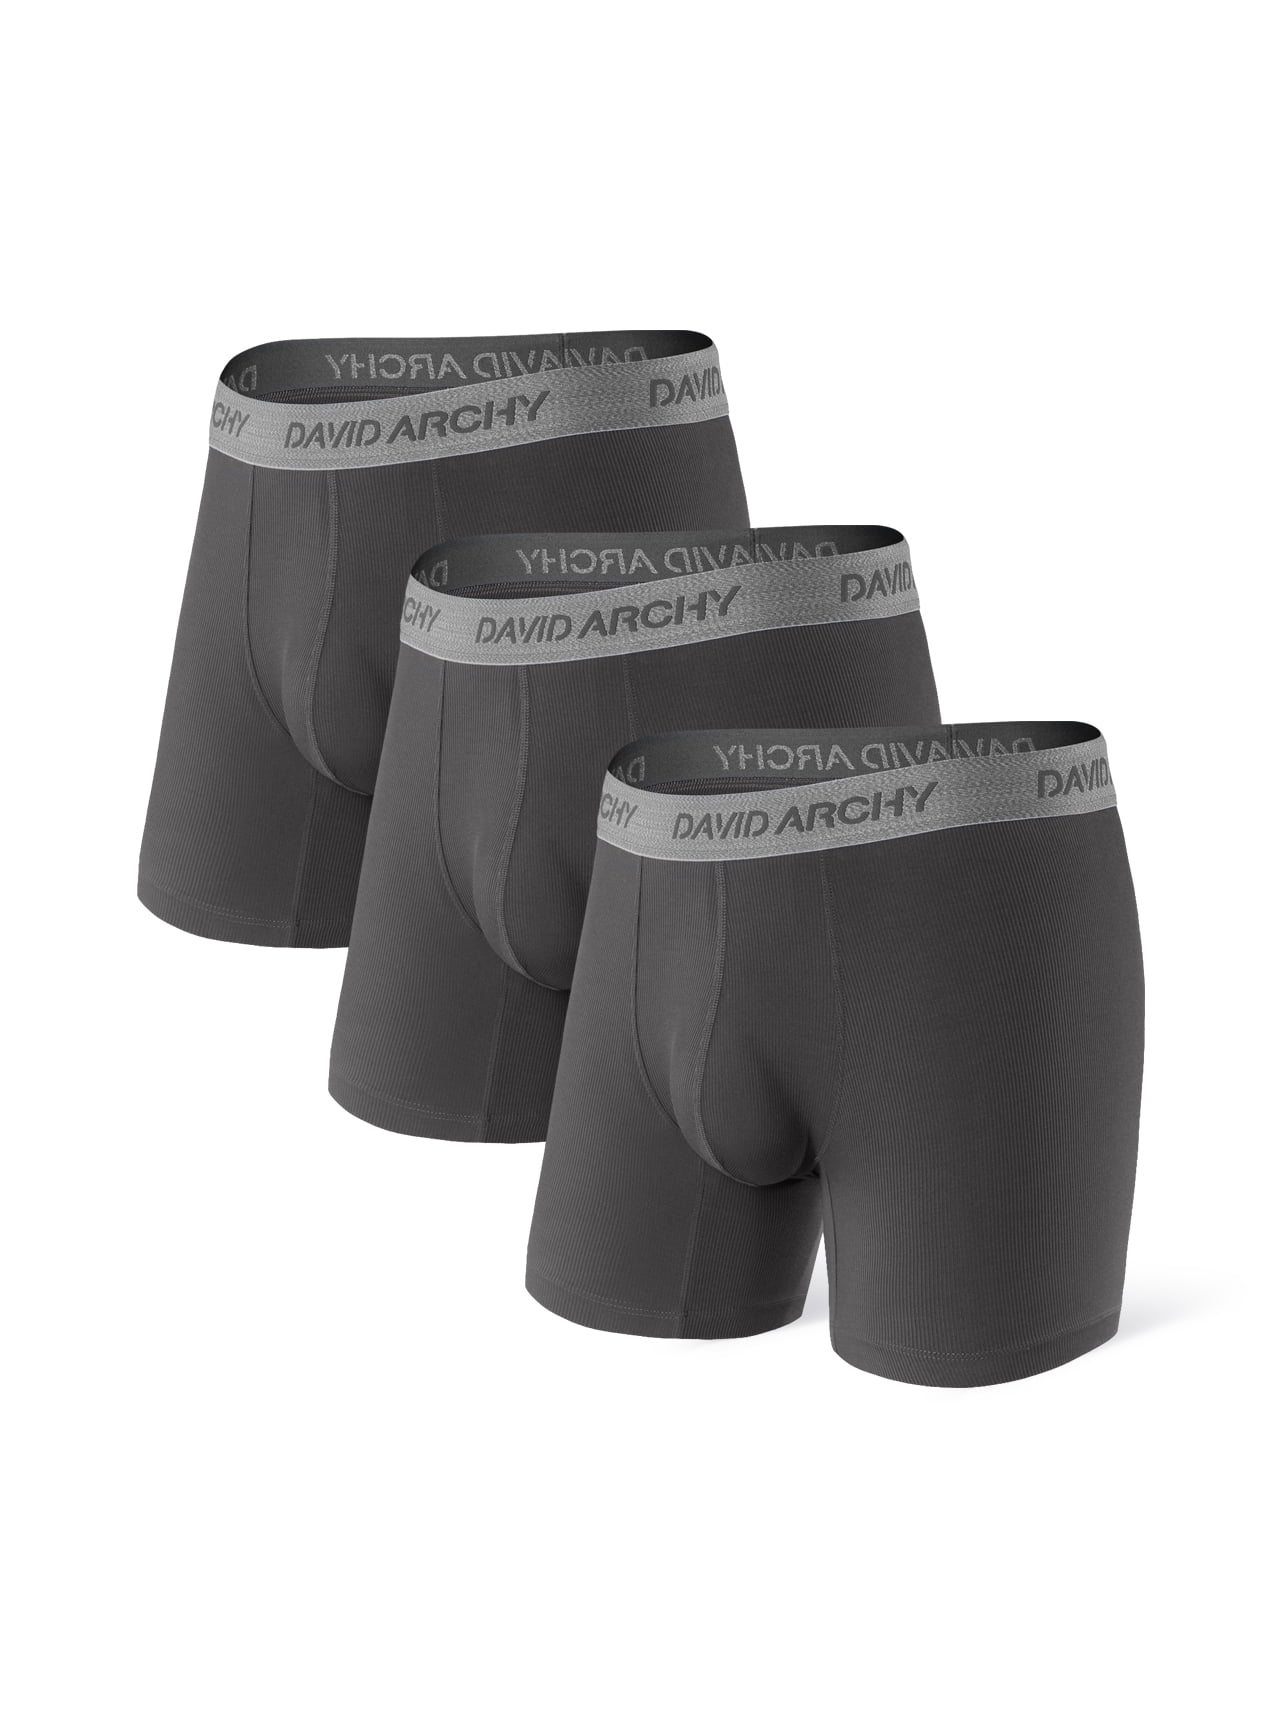 DAVID ARCHY Adult Men's Underwear Ultra Soft Micro Modal Boxer Briefs ...